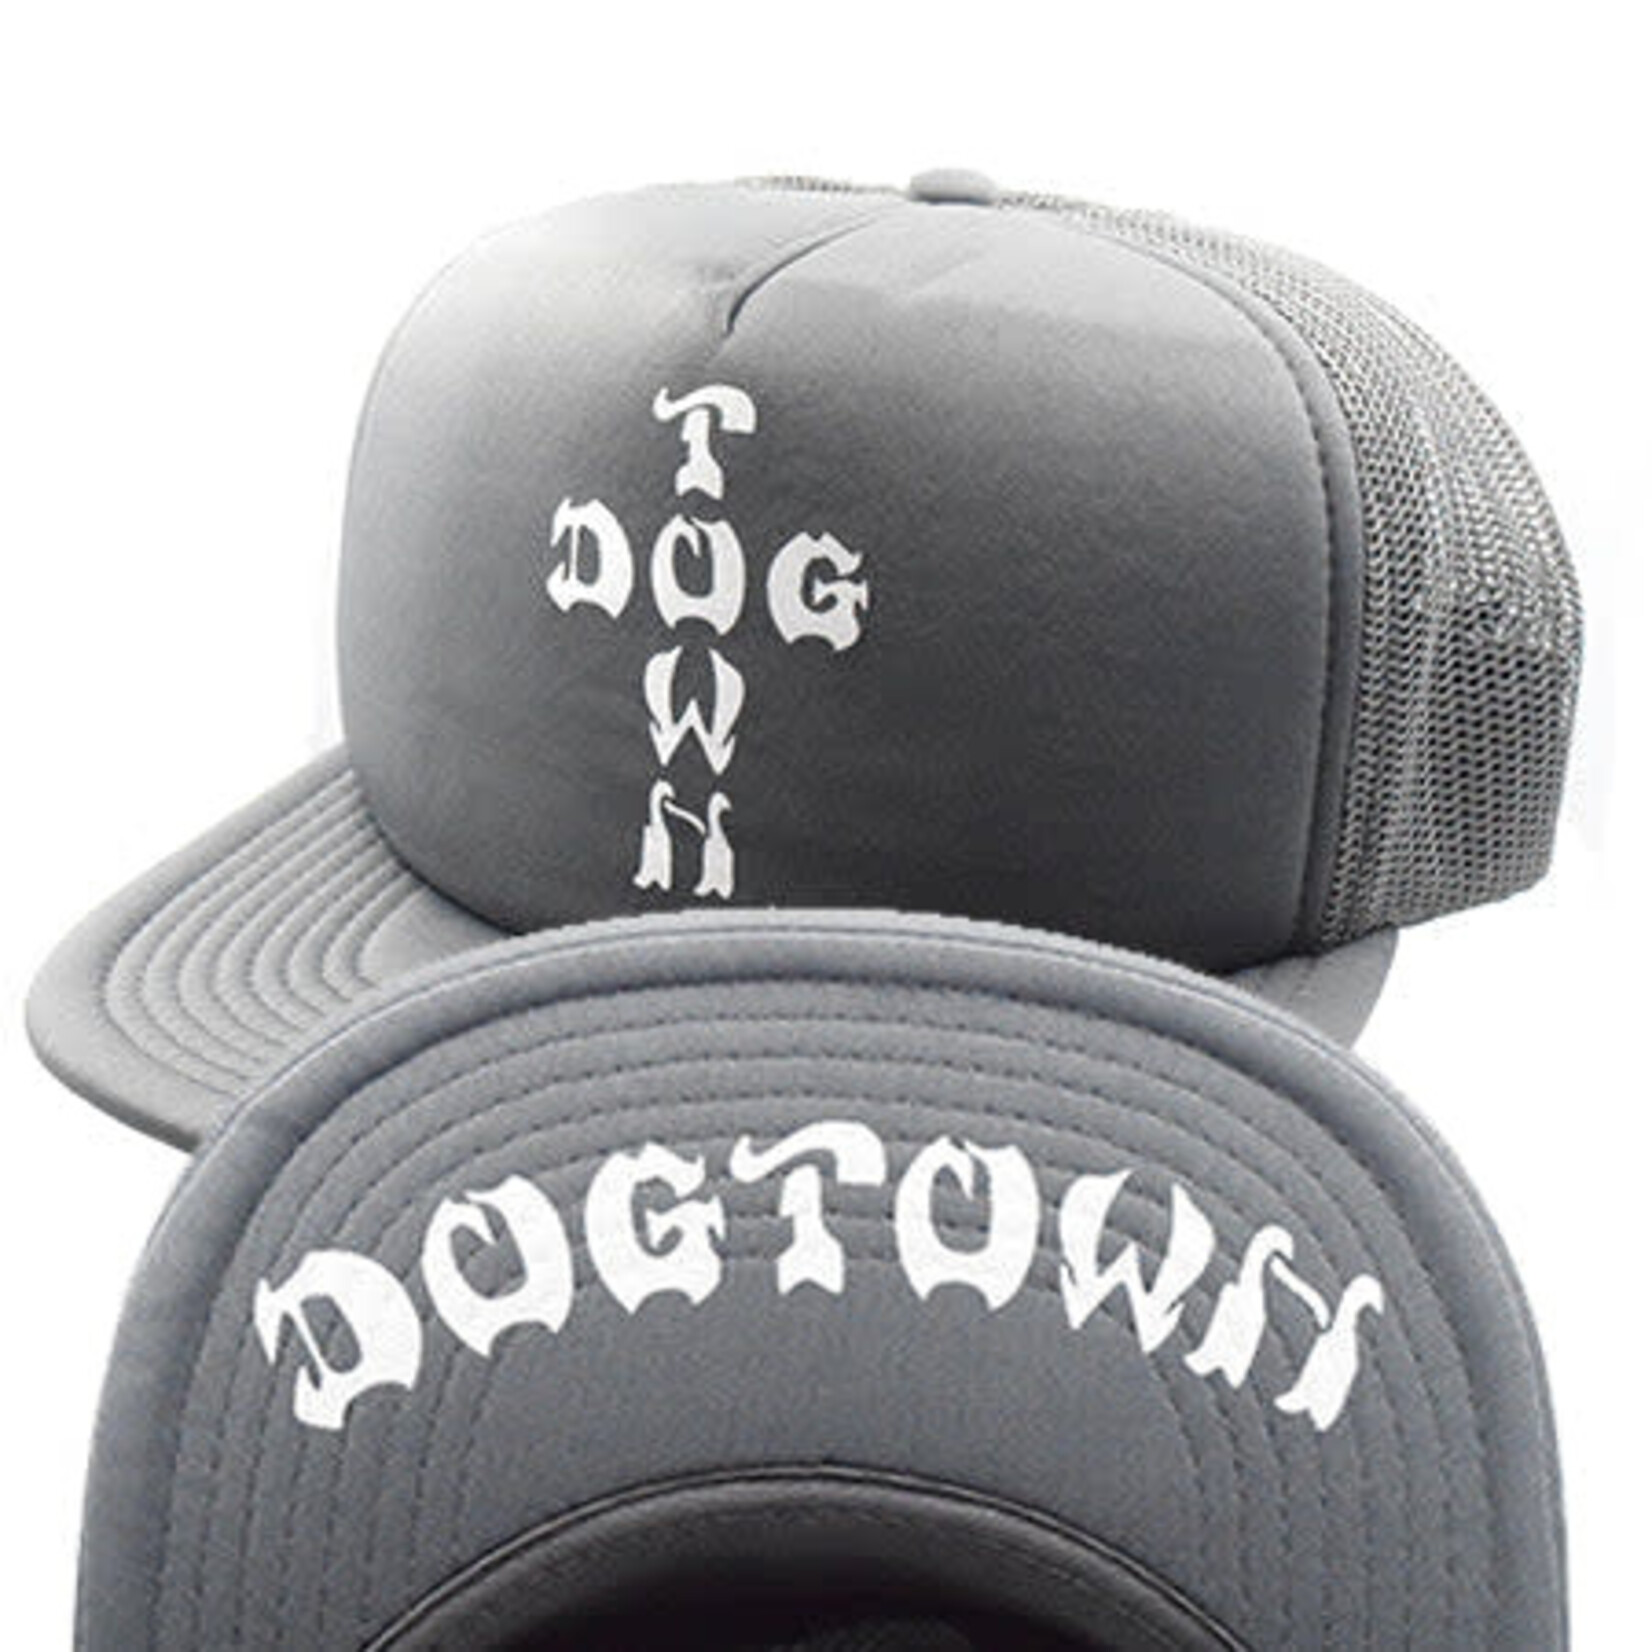 Dogtown Dogtown Cross Letters Flip Mesh Hat - Charcoal Grey